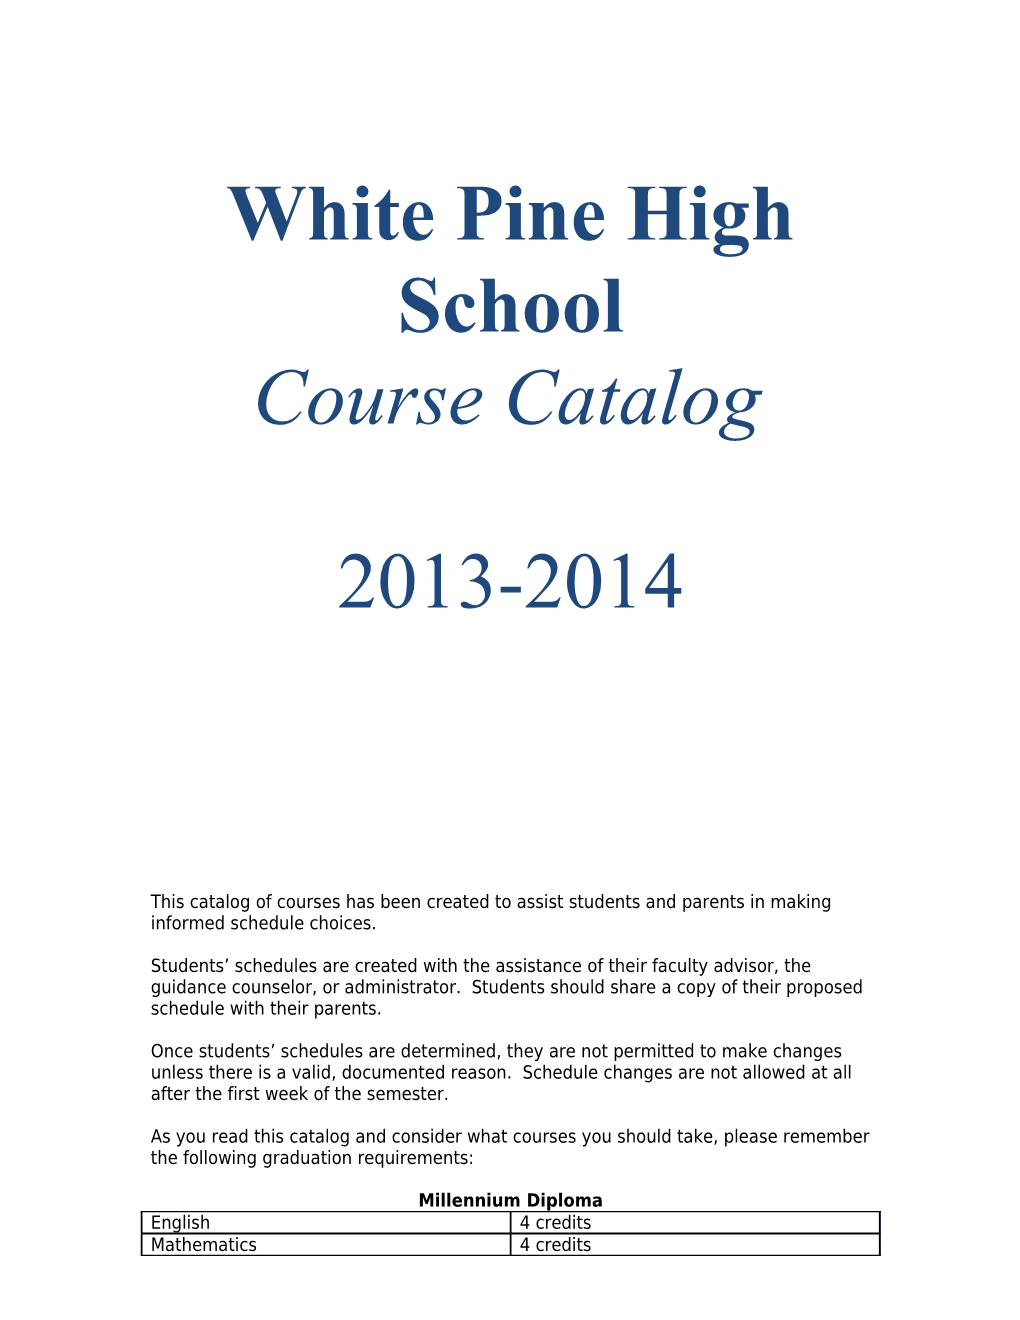 White Pine High School